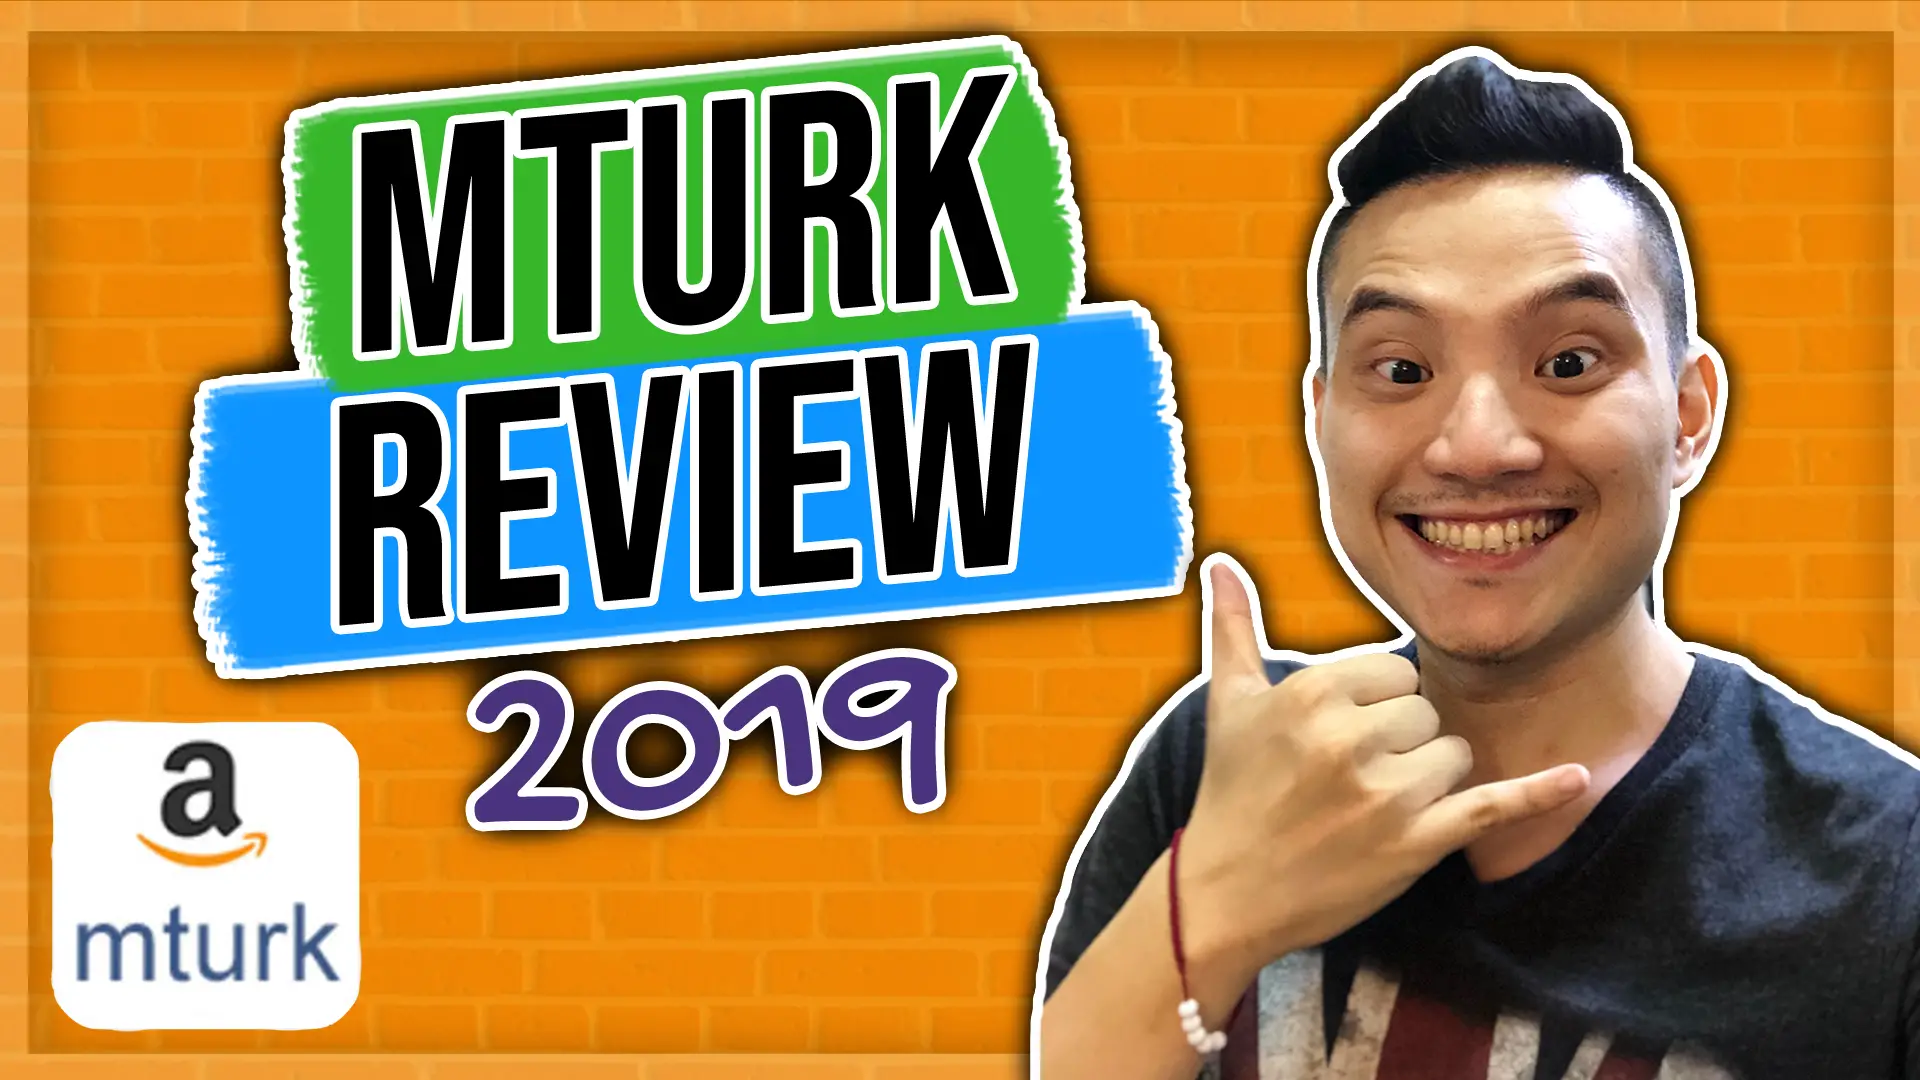 amazon mechanical turk review 2019